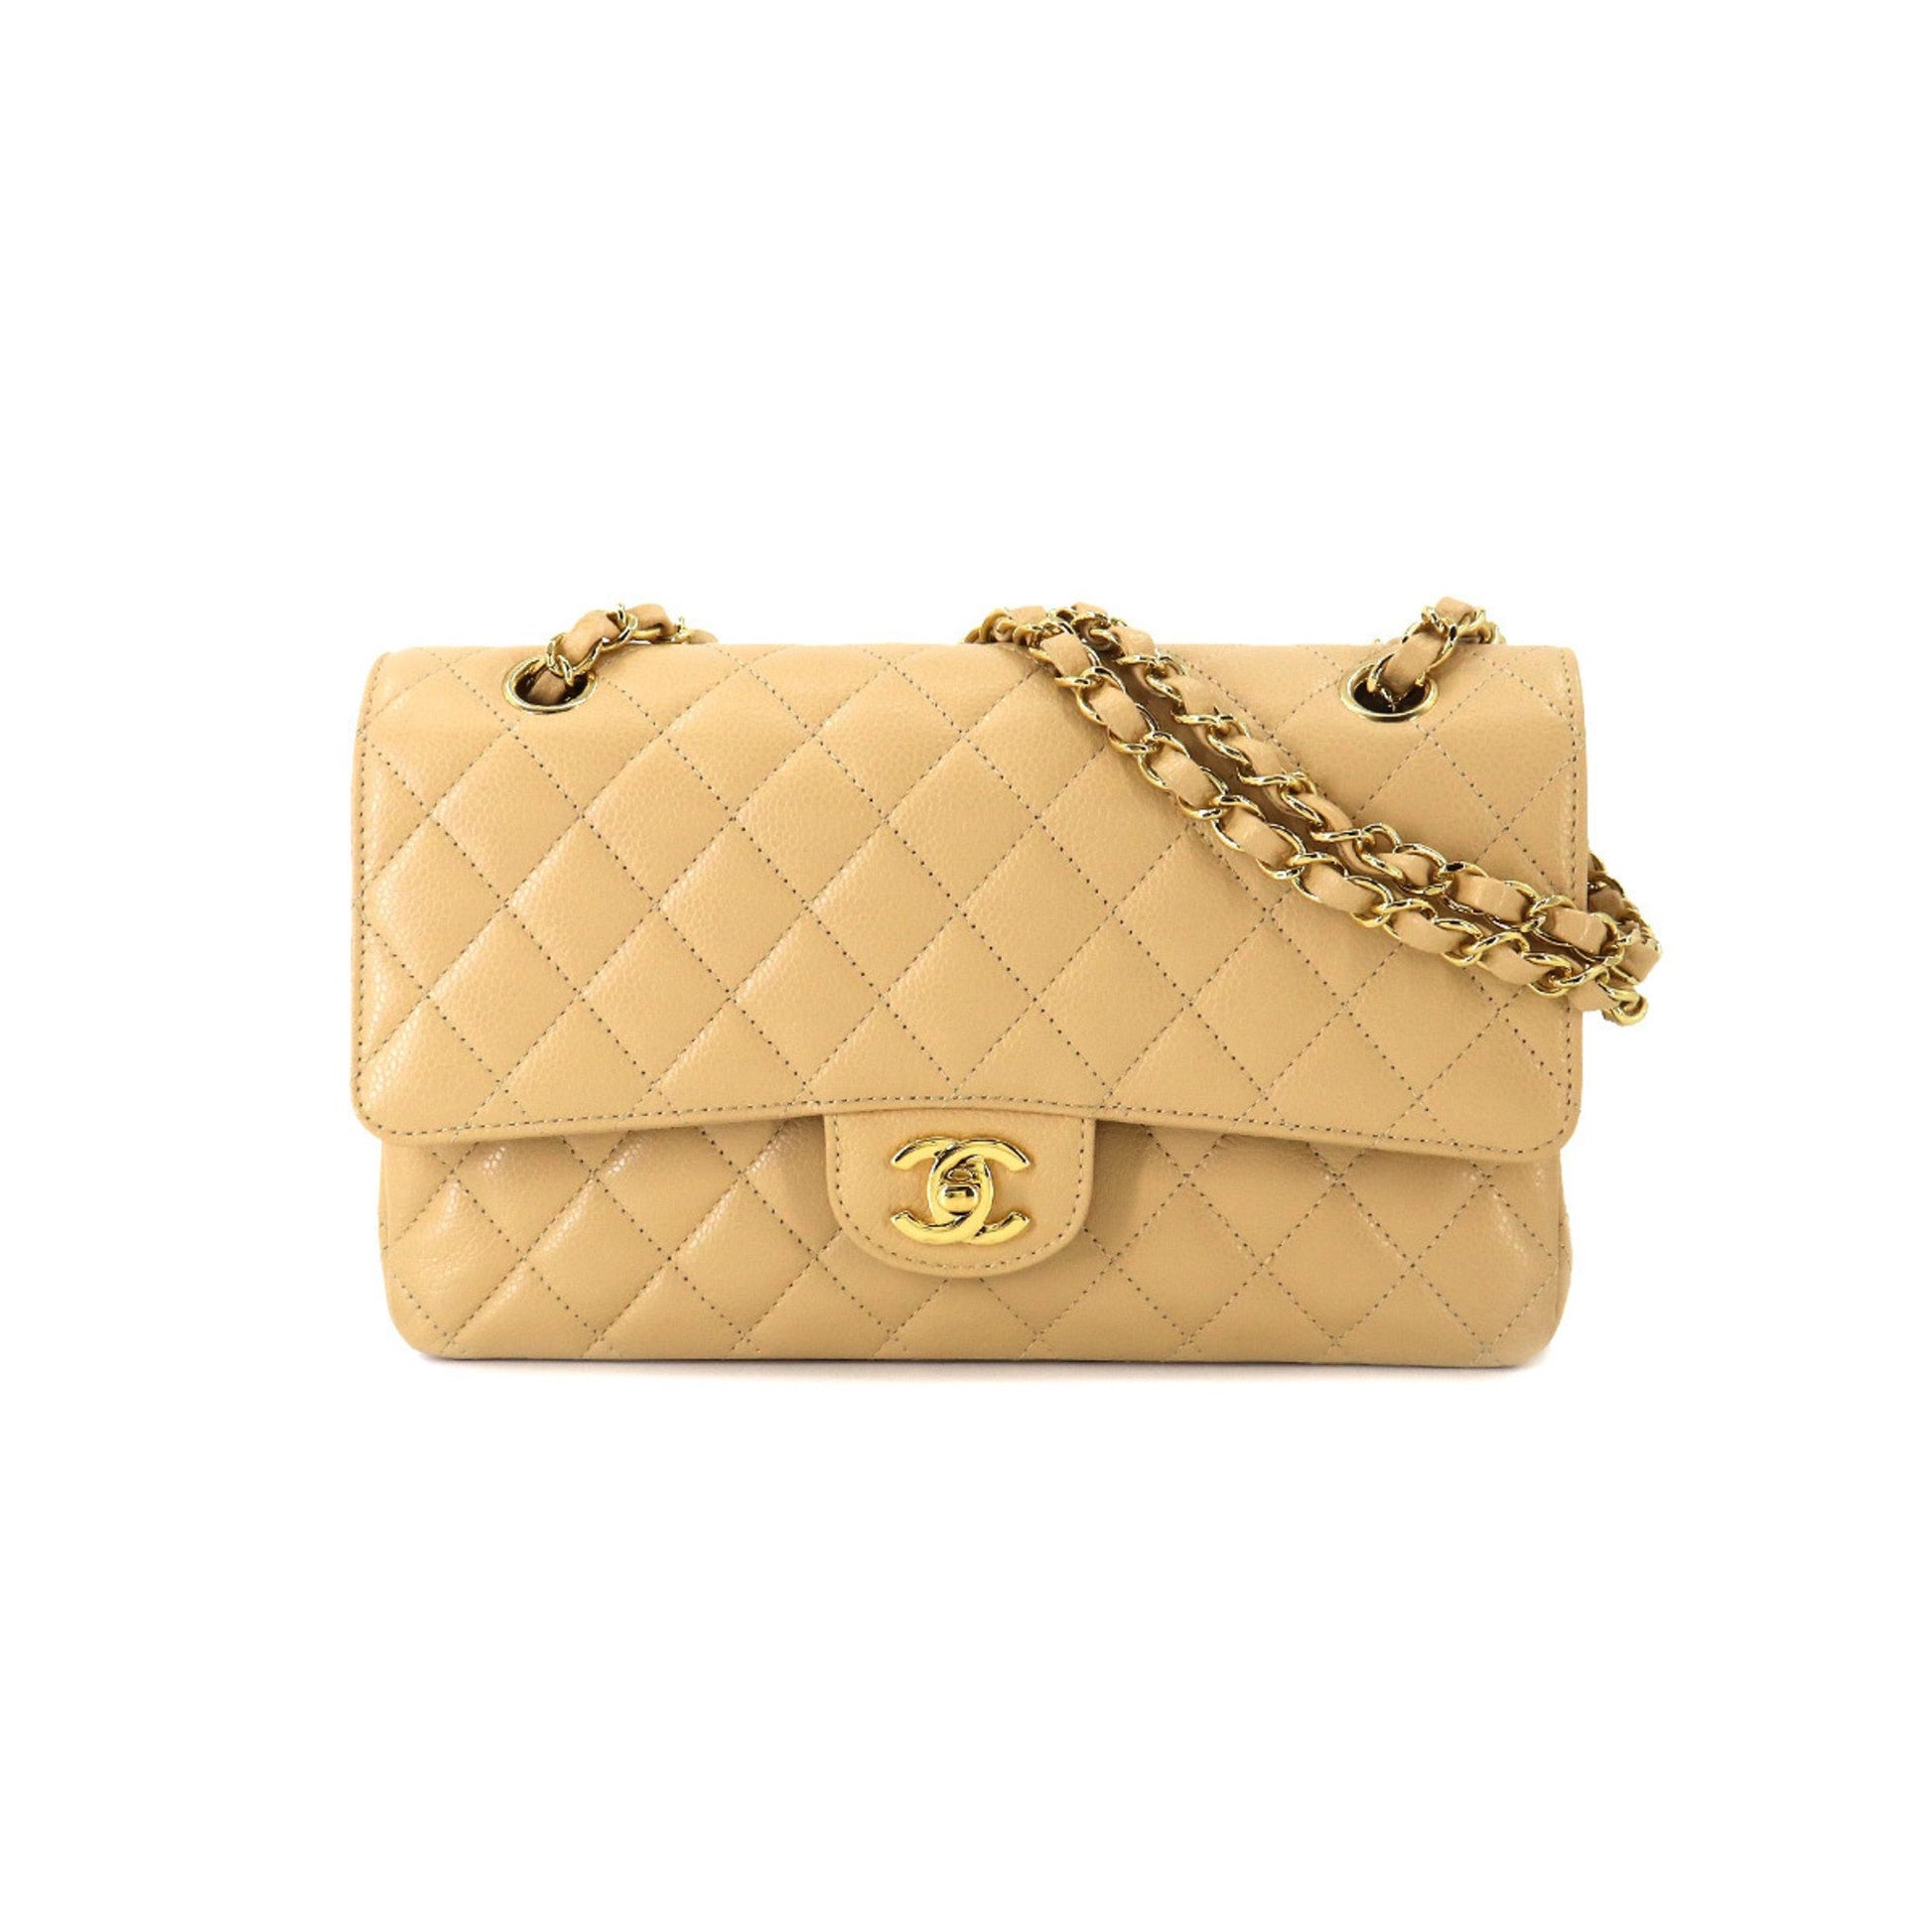 Chanel matelasse 25 chain shoulder bag caviar skin beige A01112 gold m